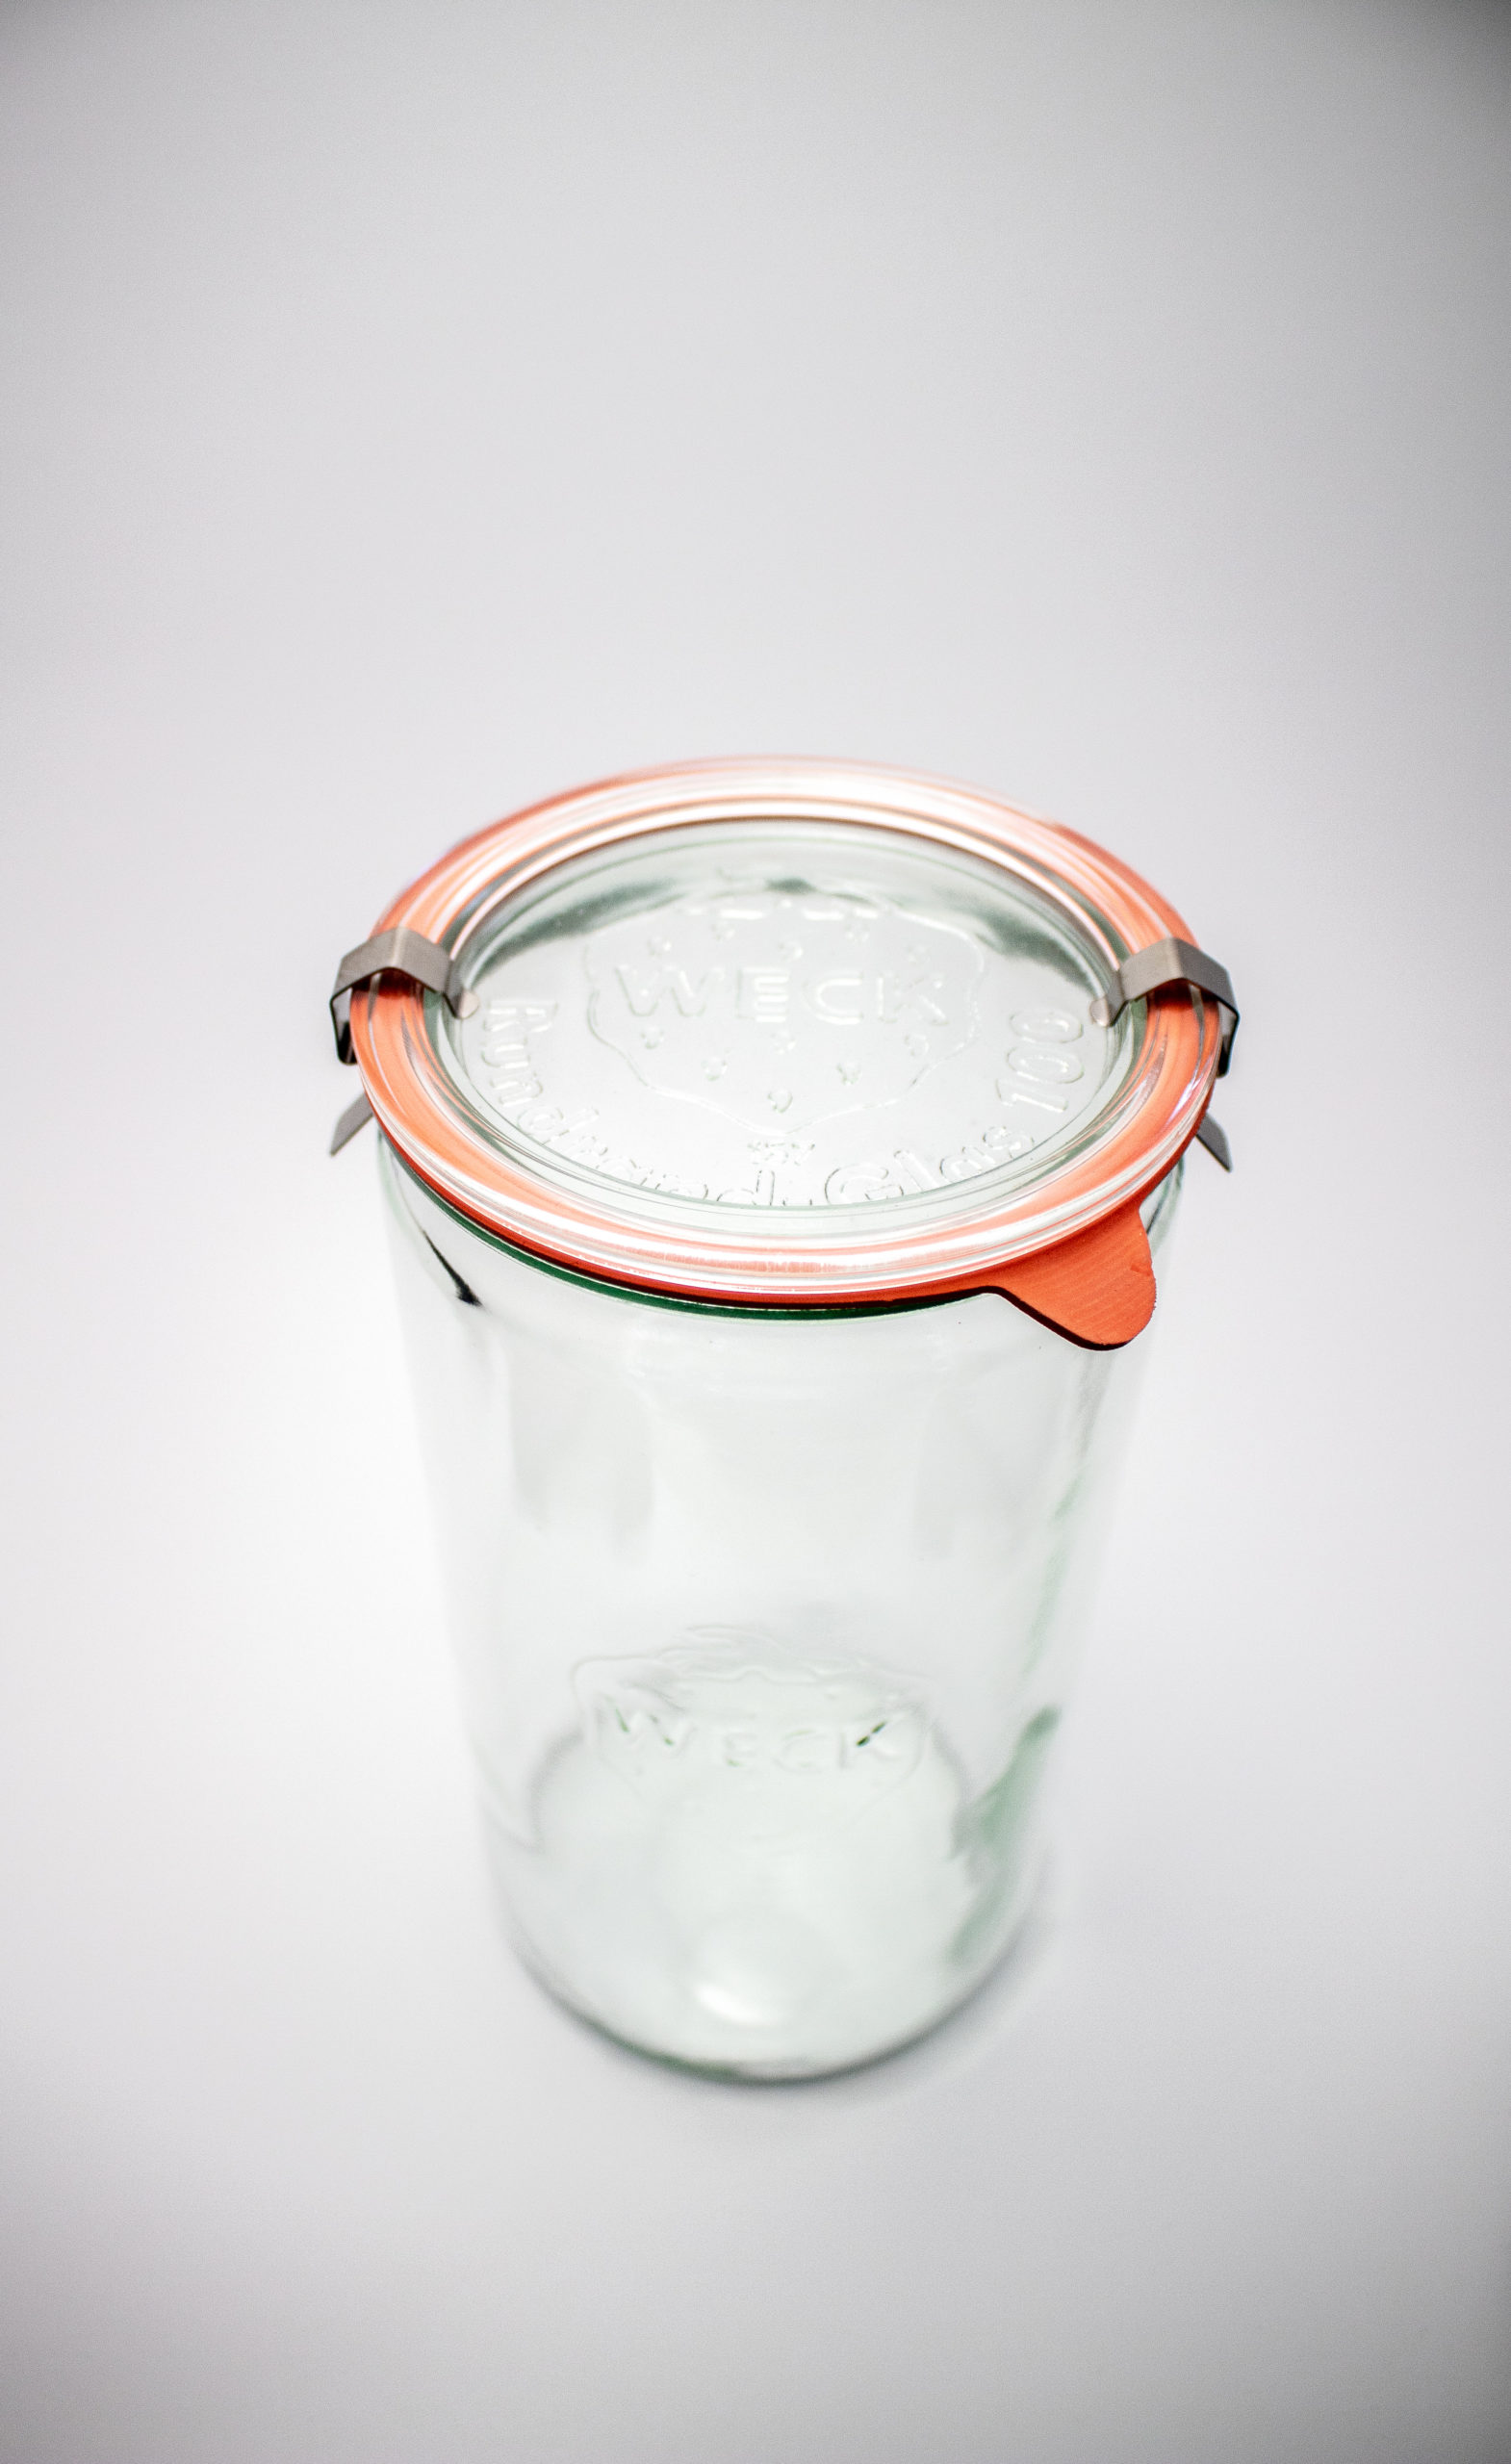 Weck 789 Mini Cylindrical Jar - Magnolia